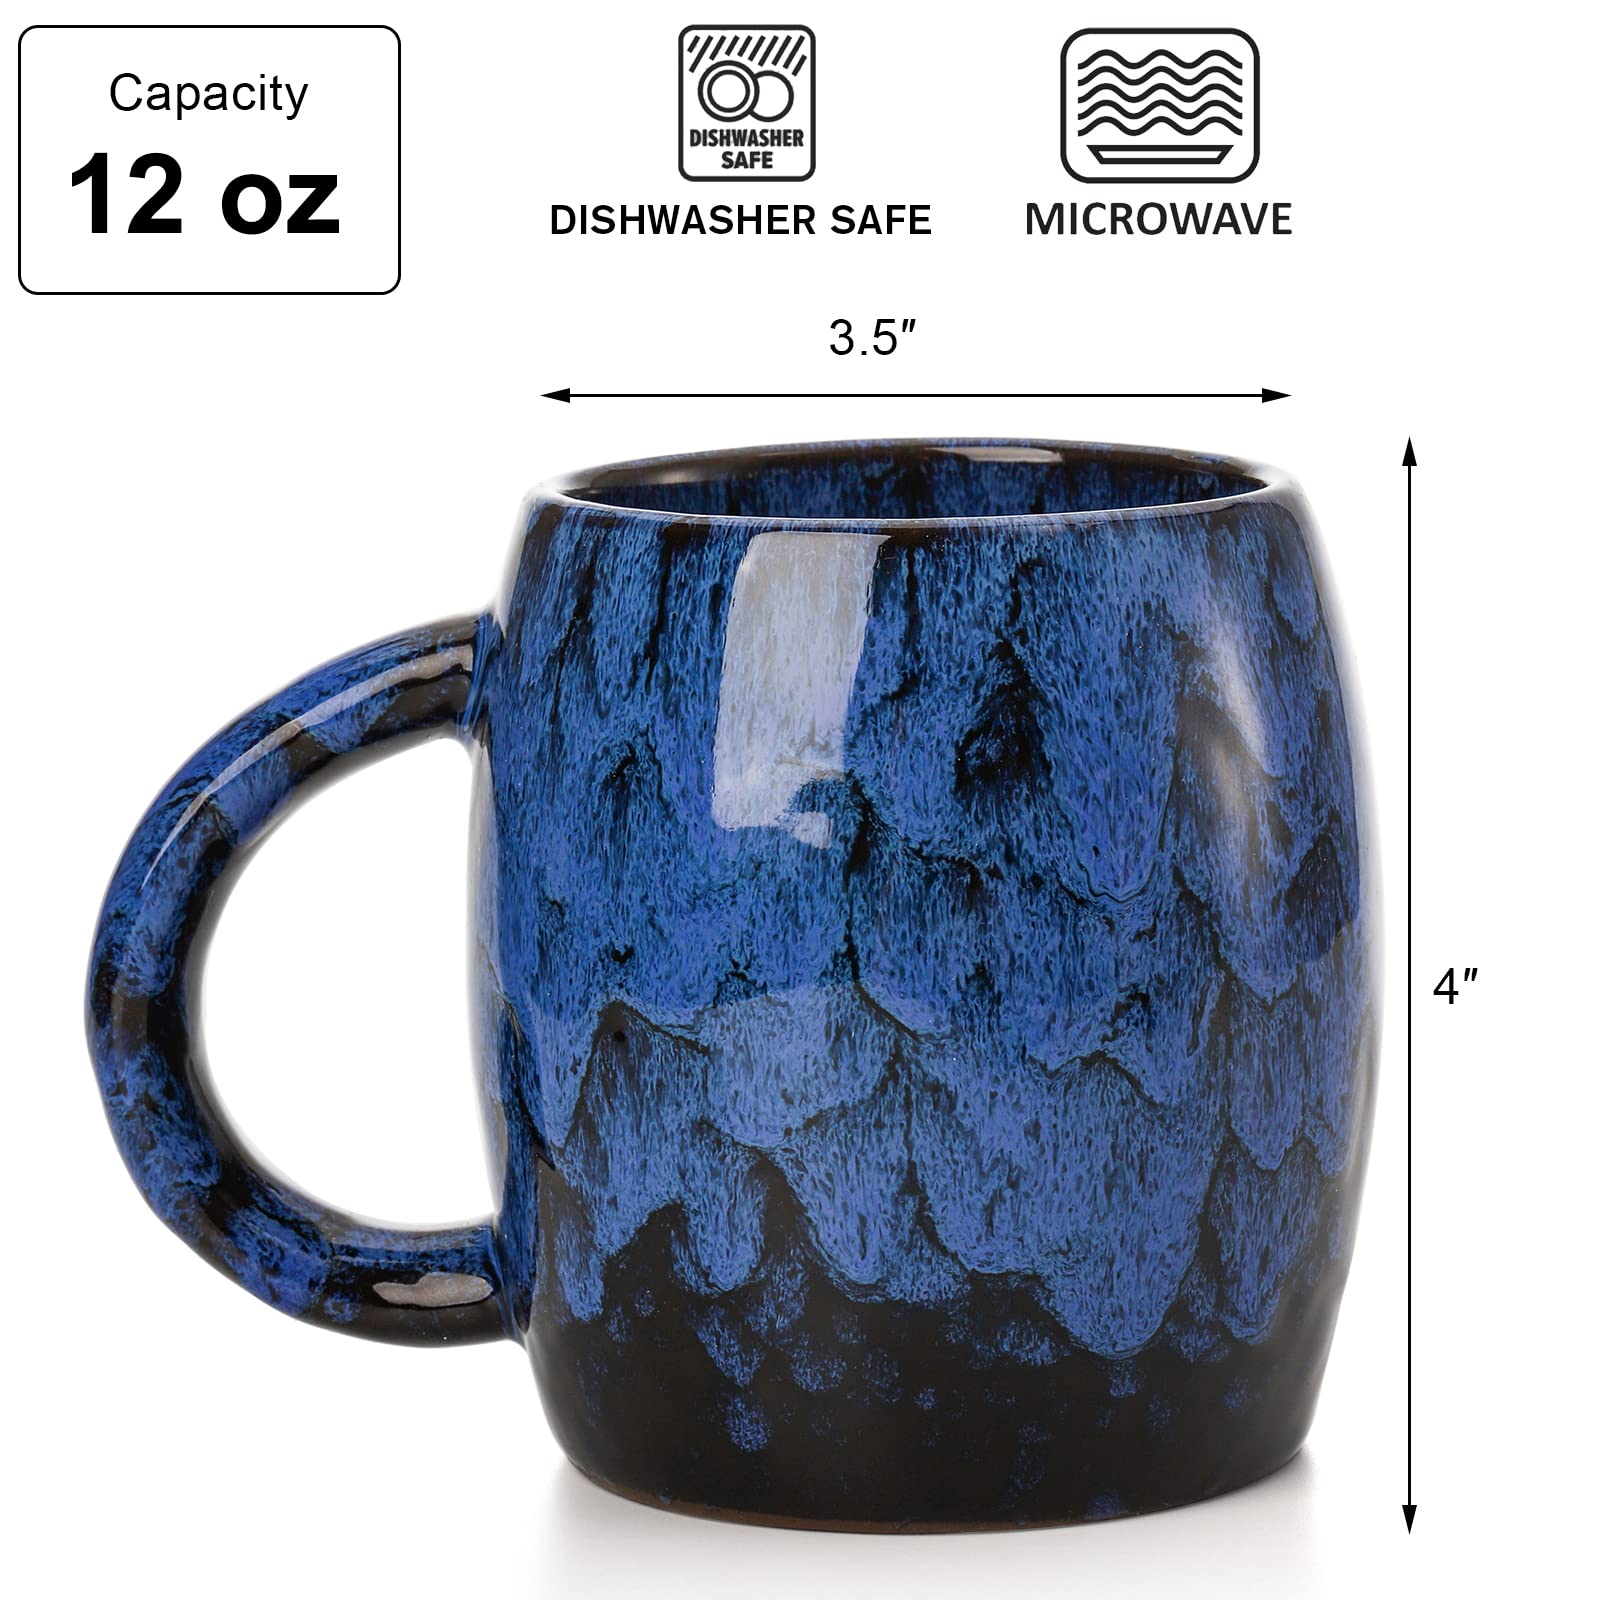 Elsjoy Set of 2 Ceramic Coffee Mugs, 12 Oz Kiln Glaze Porcelain Mugs with Handle, Vintage Coffee Mugs Gift for Home, Office, Dishwaher and Microwave Safe, Retro Blue & White